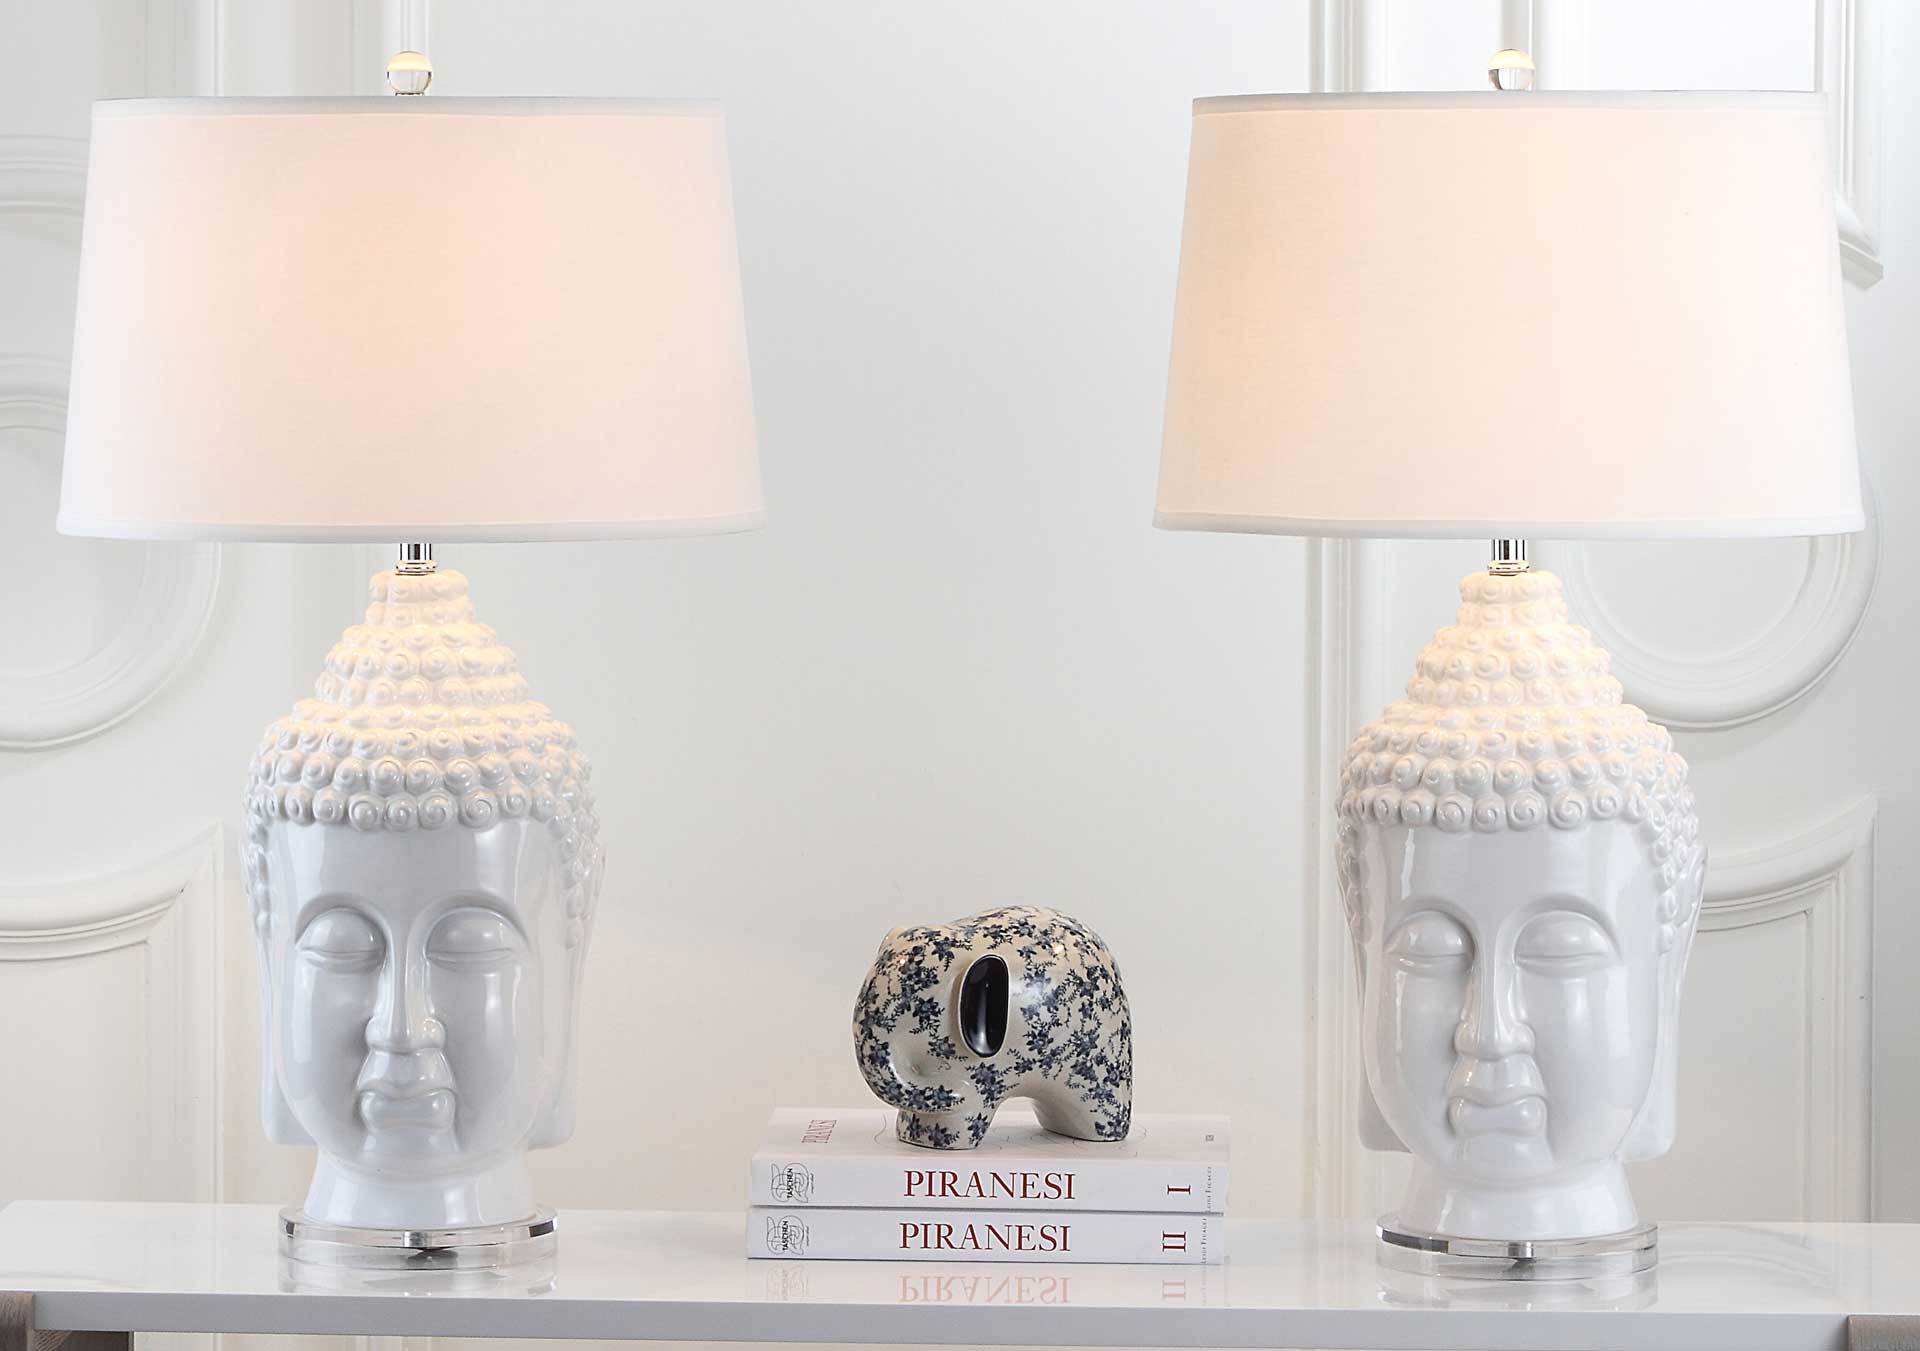 Sean Buddha Table Lamp White (Set of 2)